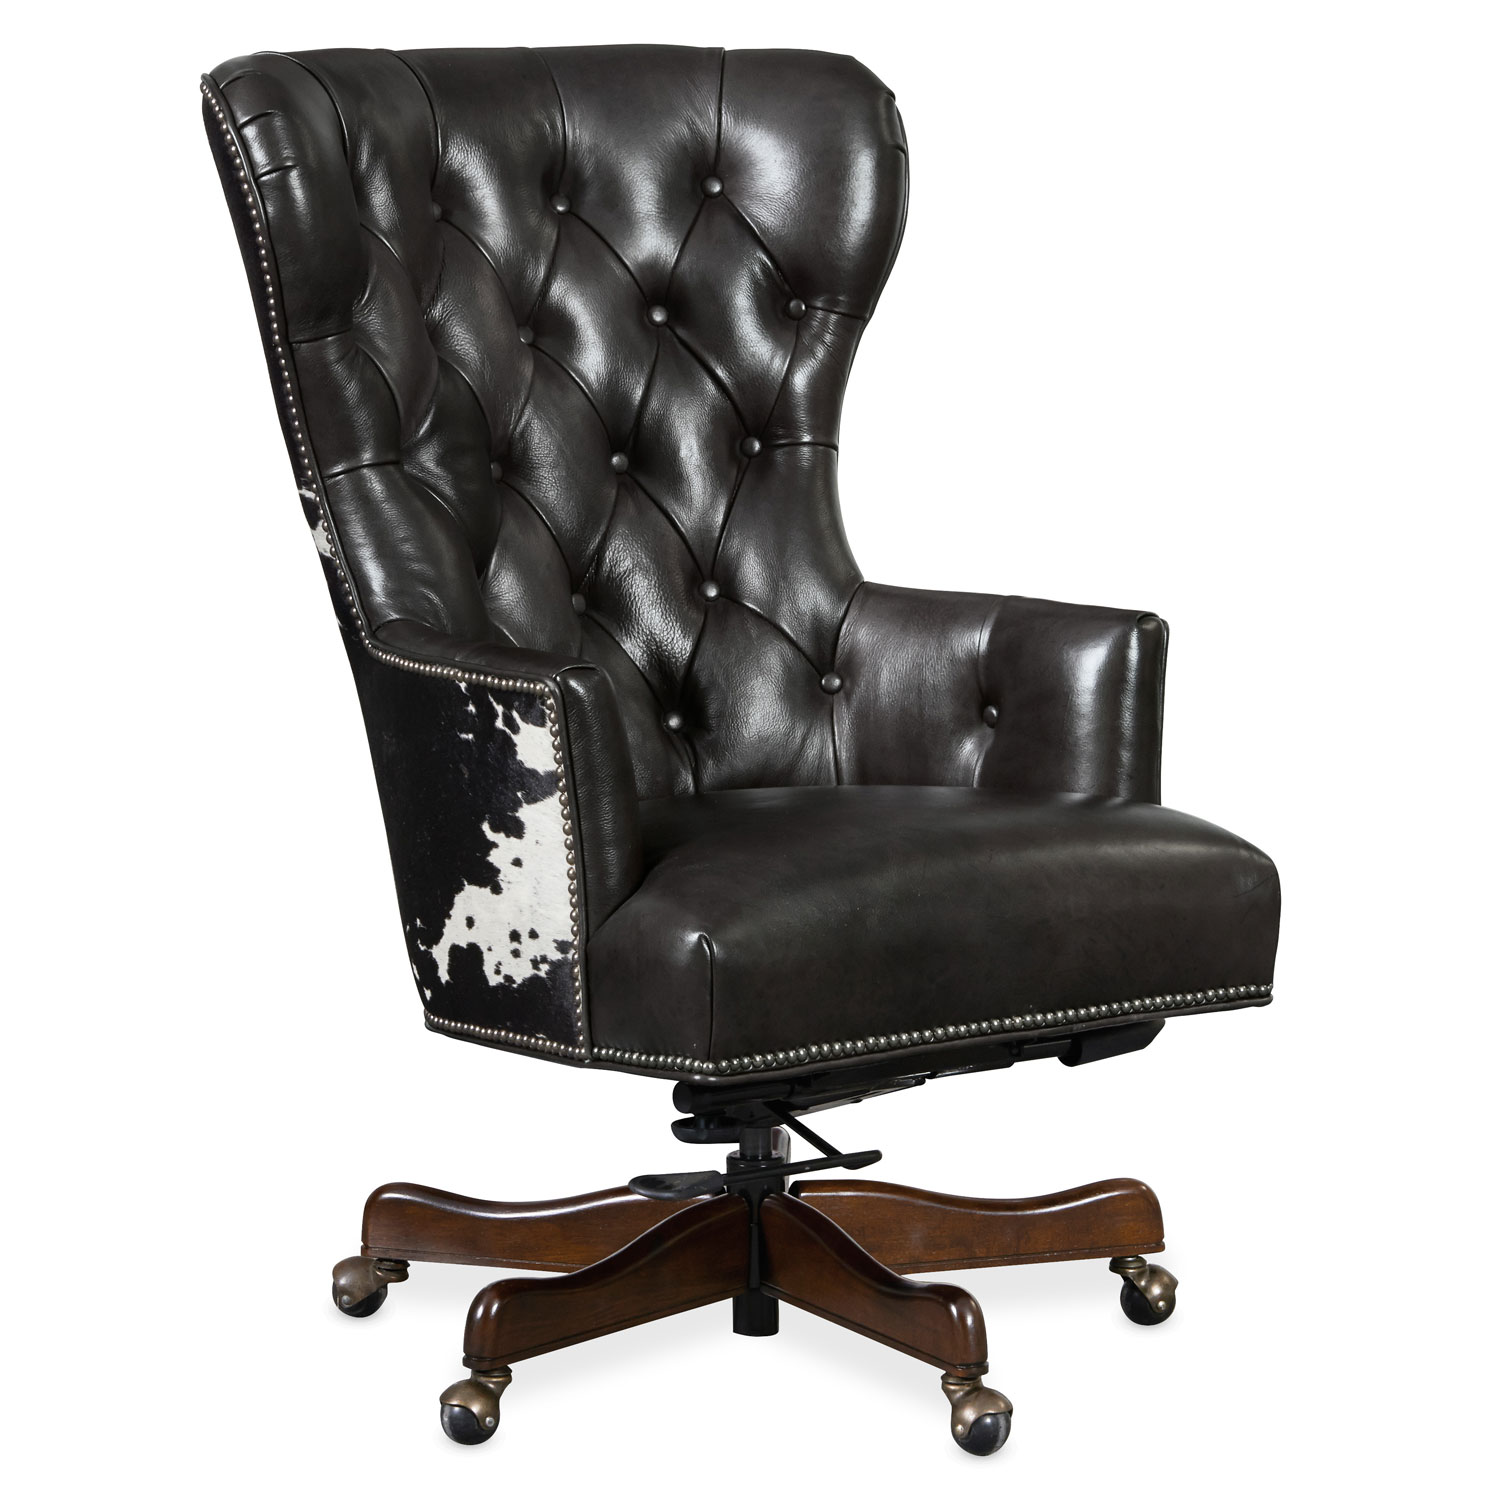 Hooker Furniture Black and White Katherine Executive Swivel Tilt Chair